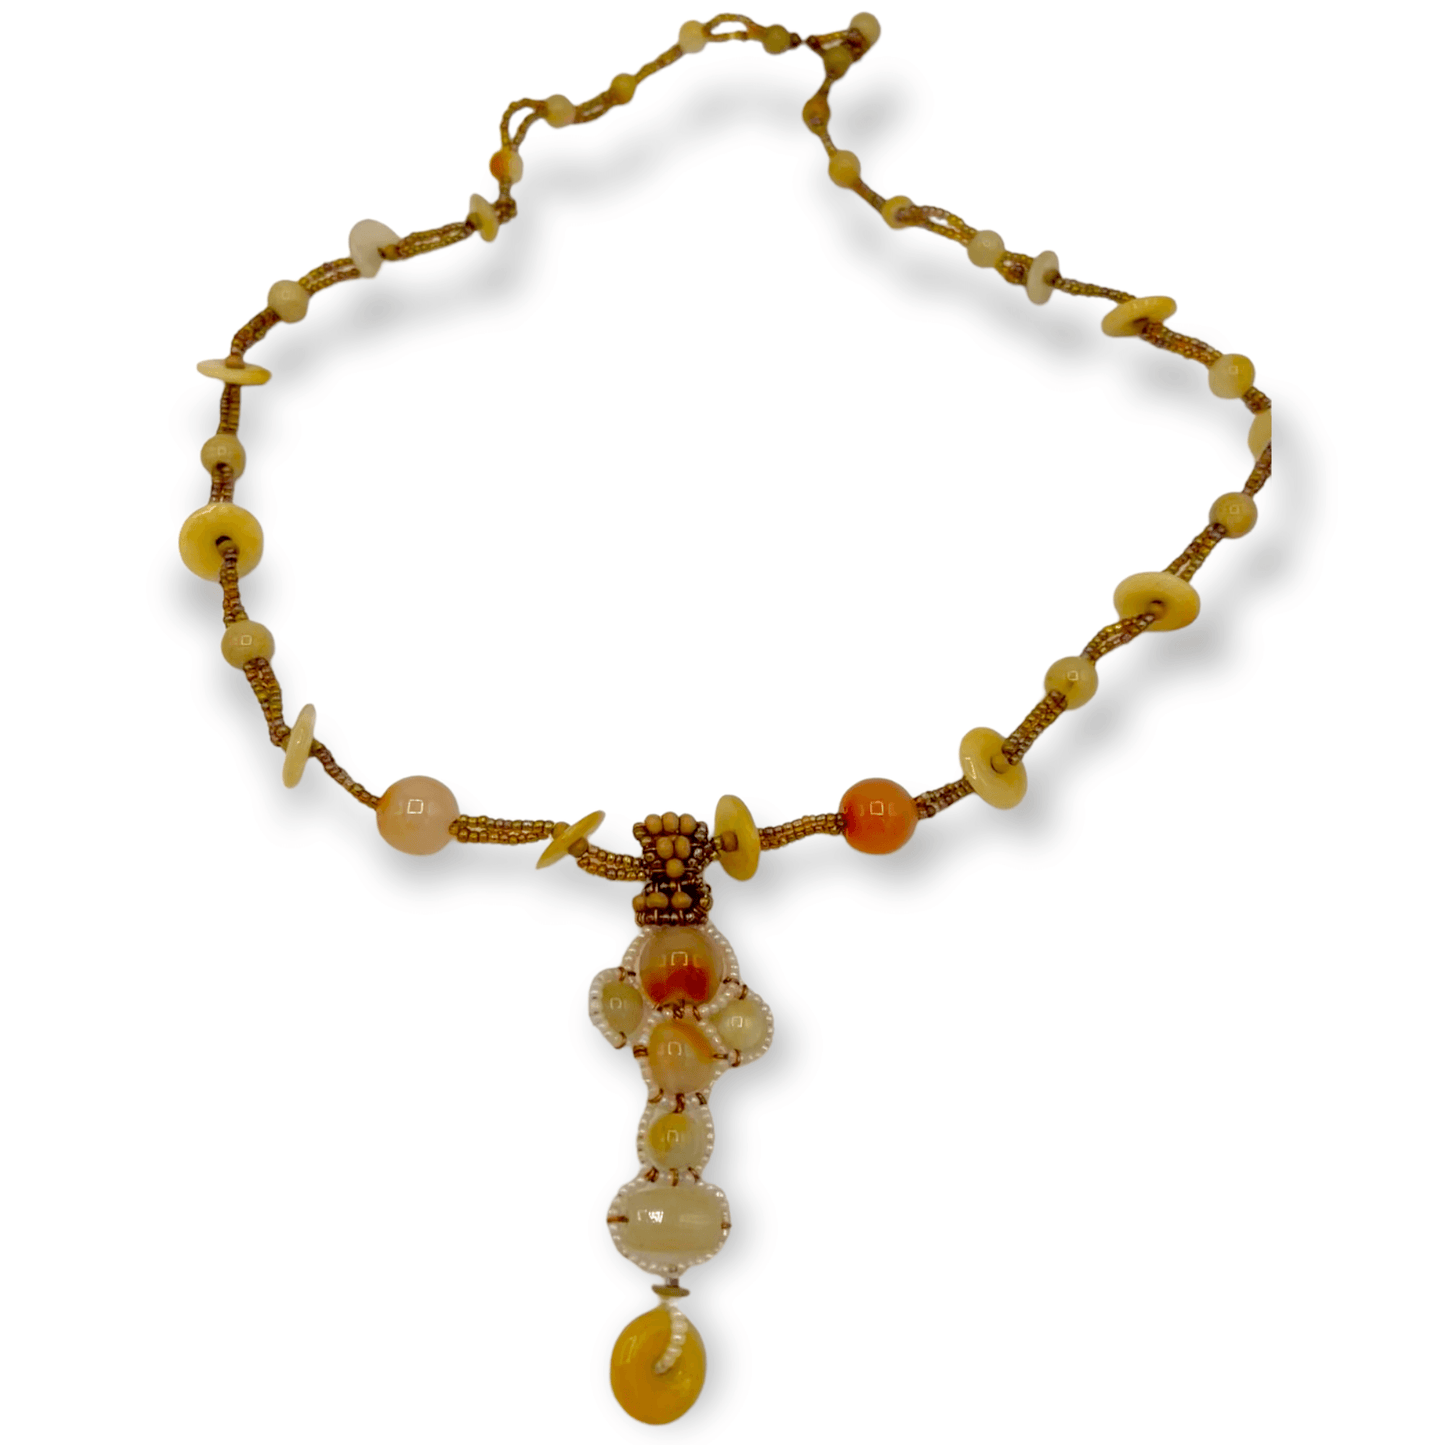 Earth tone amber pendant necklace makes a statement - Sundara Joon